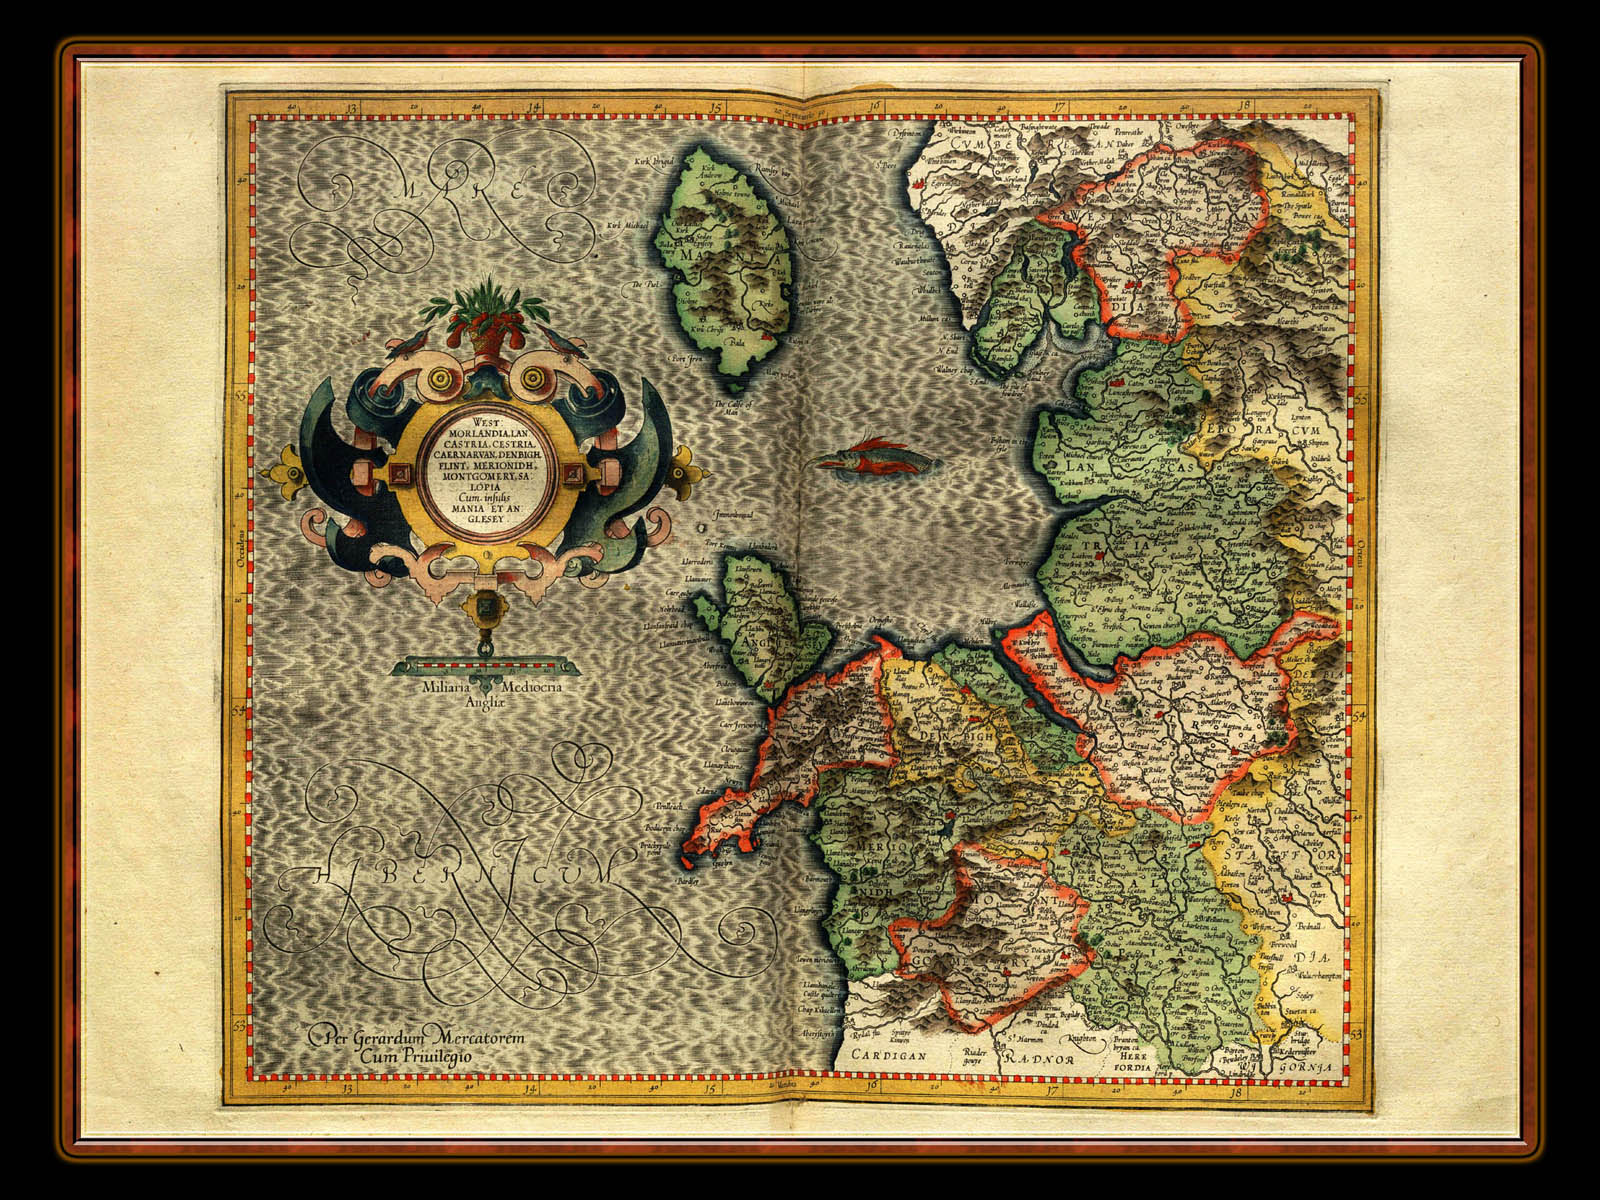 "Gerhard Mercator 1595 World Atlas - Cosmographicae" - Wallpaper No. 88 of 106. Right click for saving options.